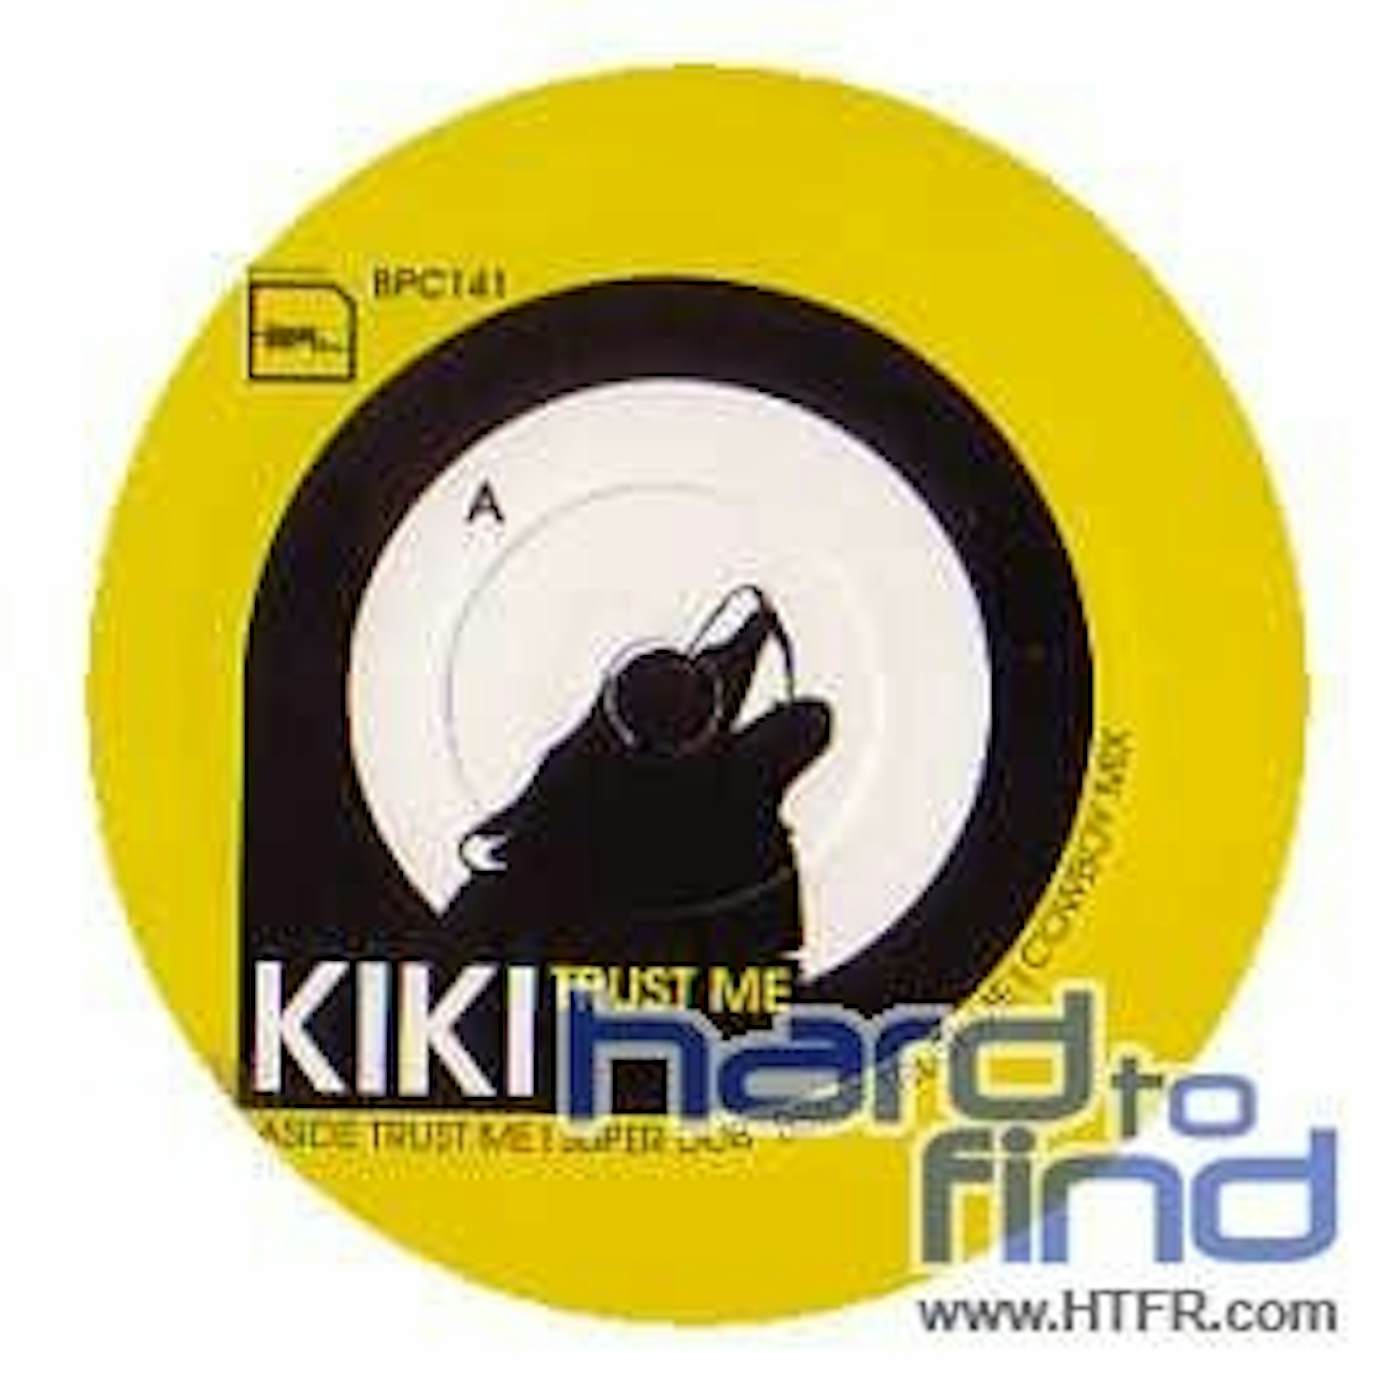 KIKI Trust Me Vinyl Record